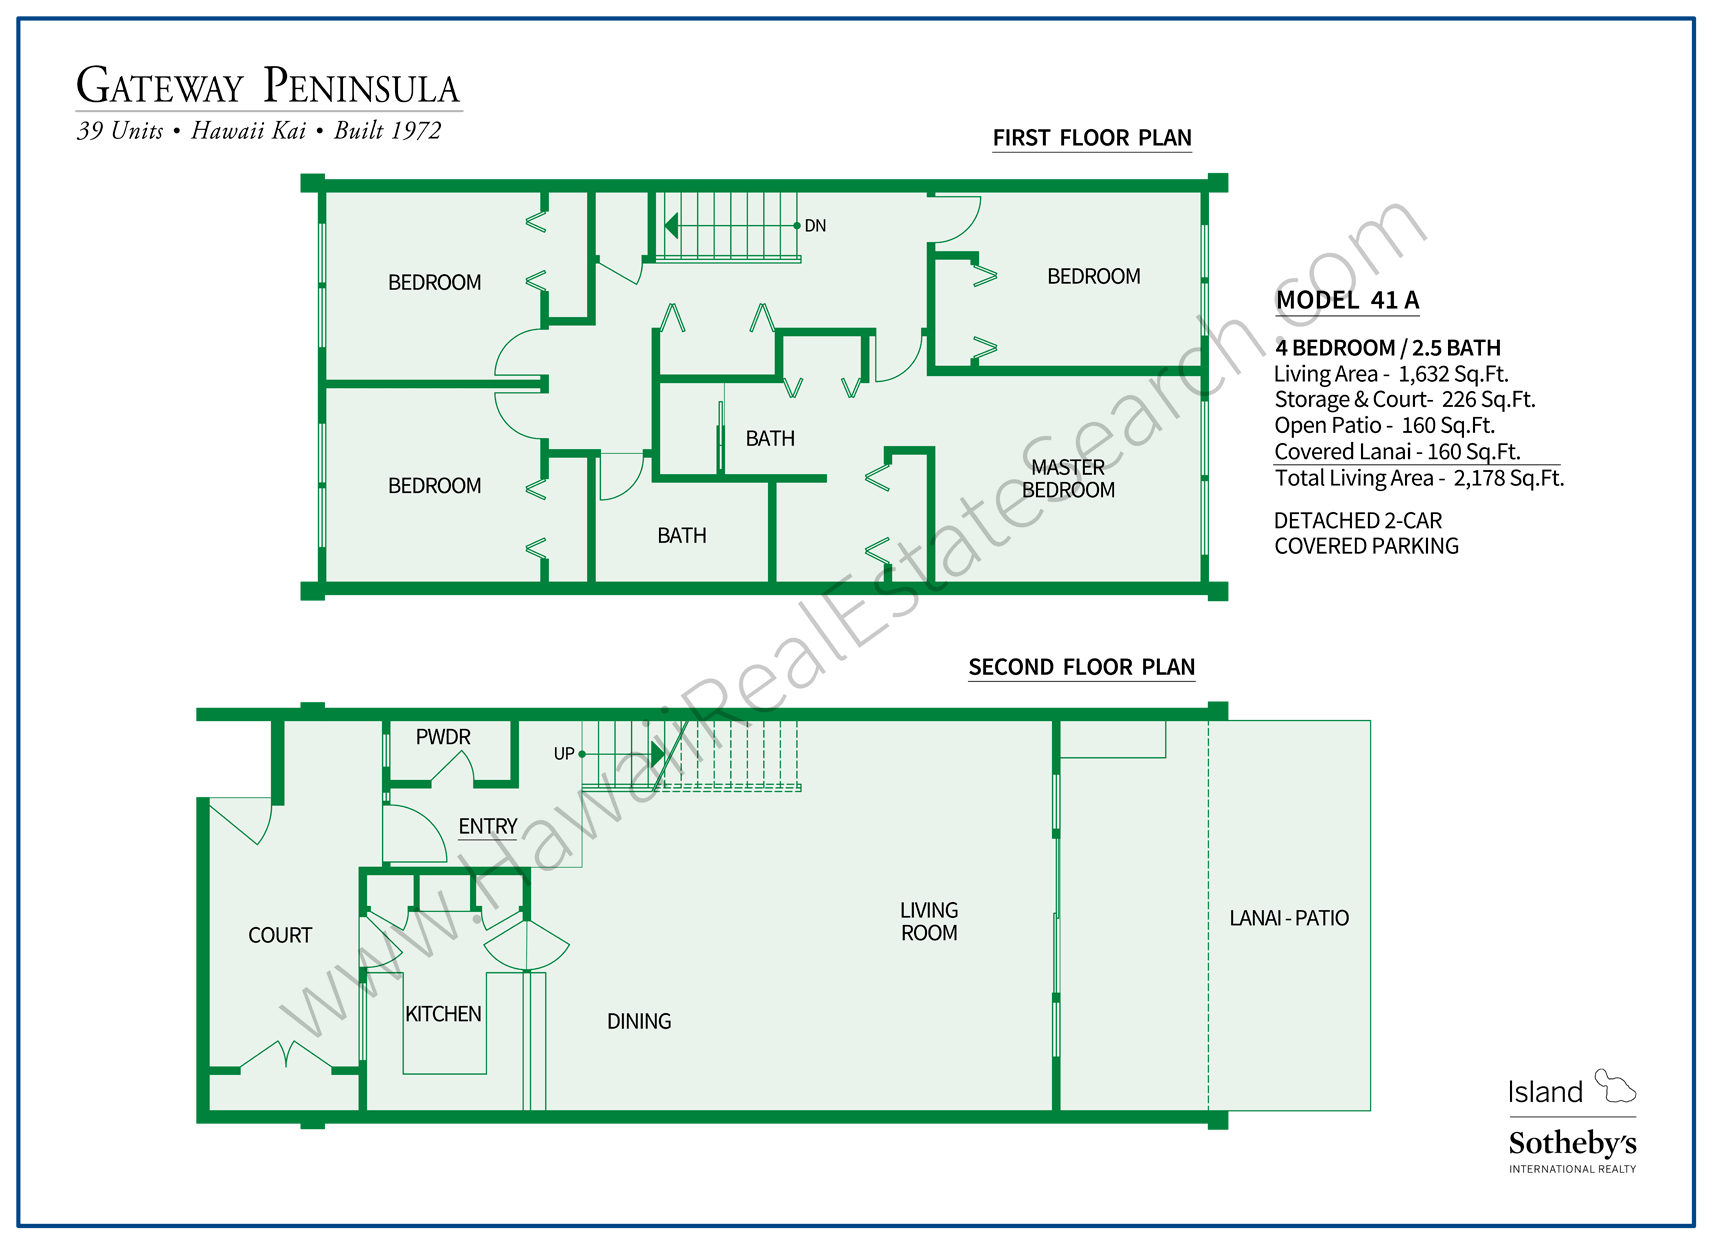 Gateway Peninsula Floor Plan at Hawaii Kai